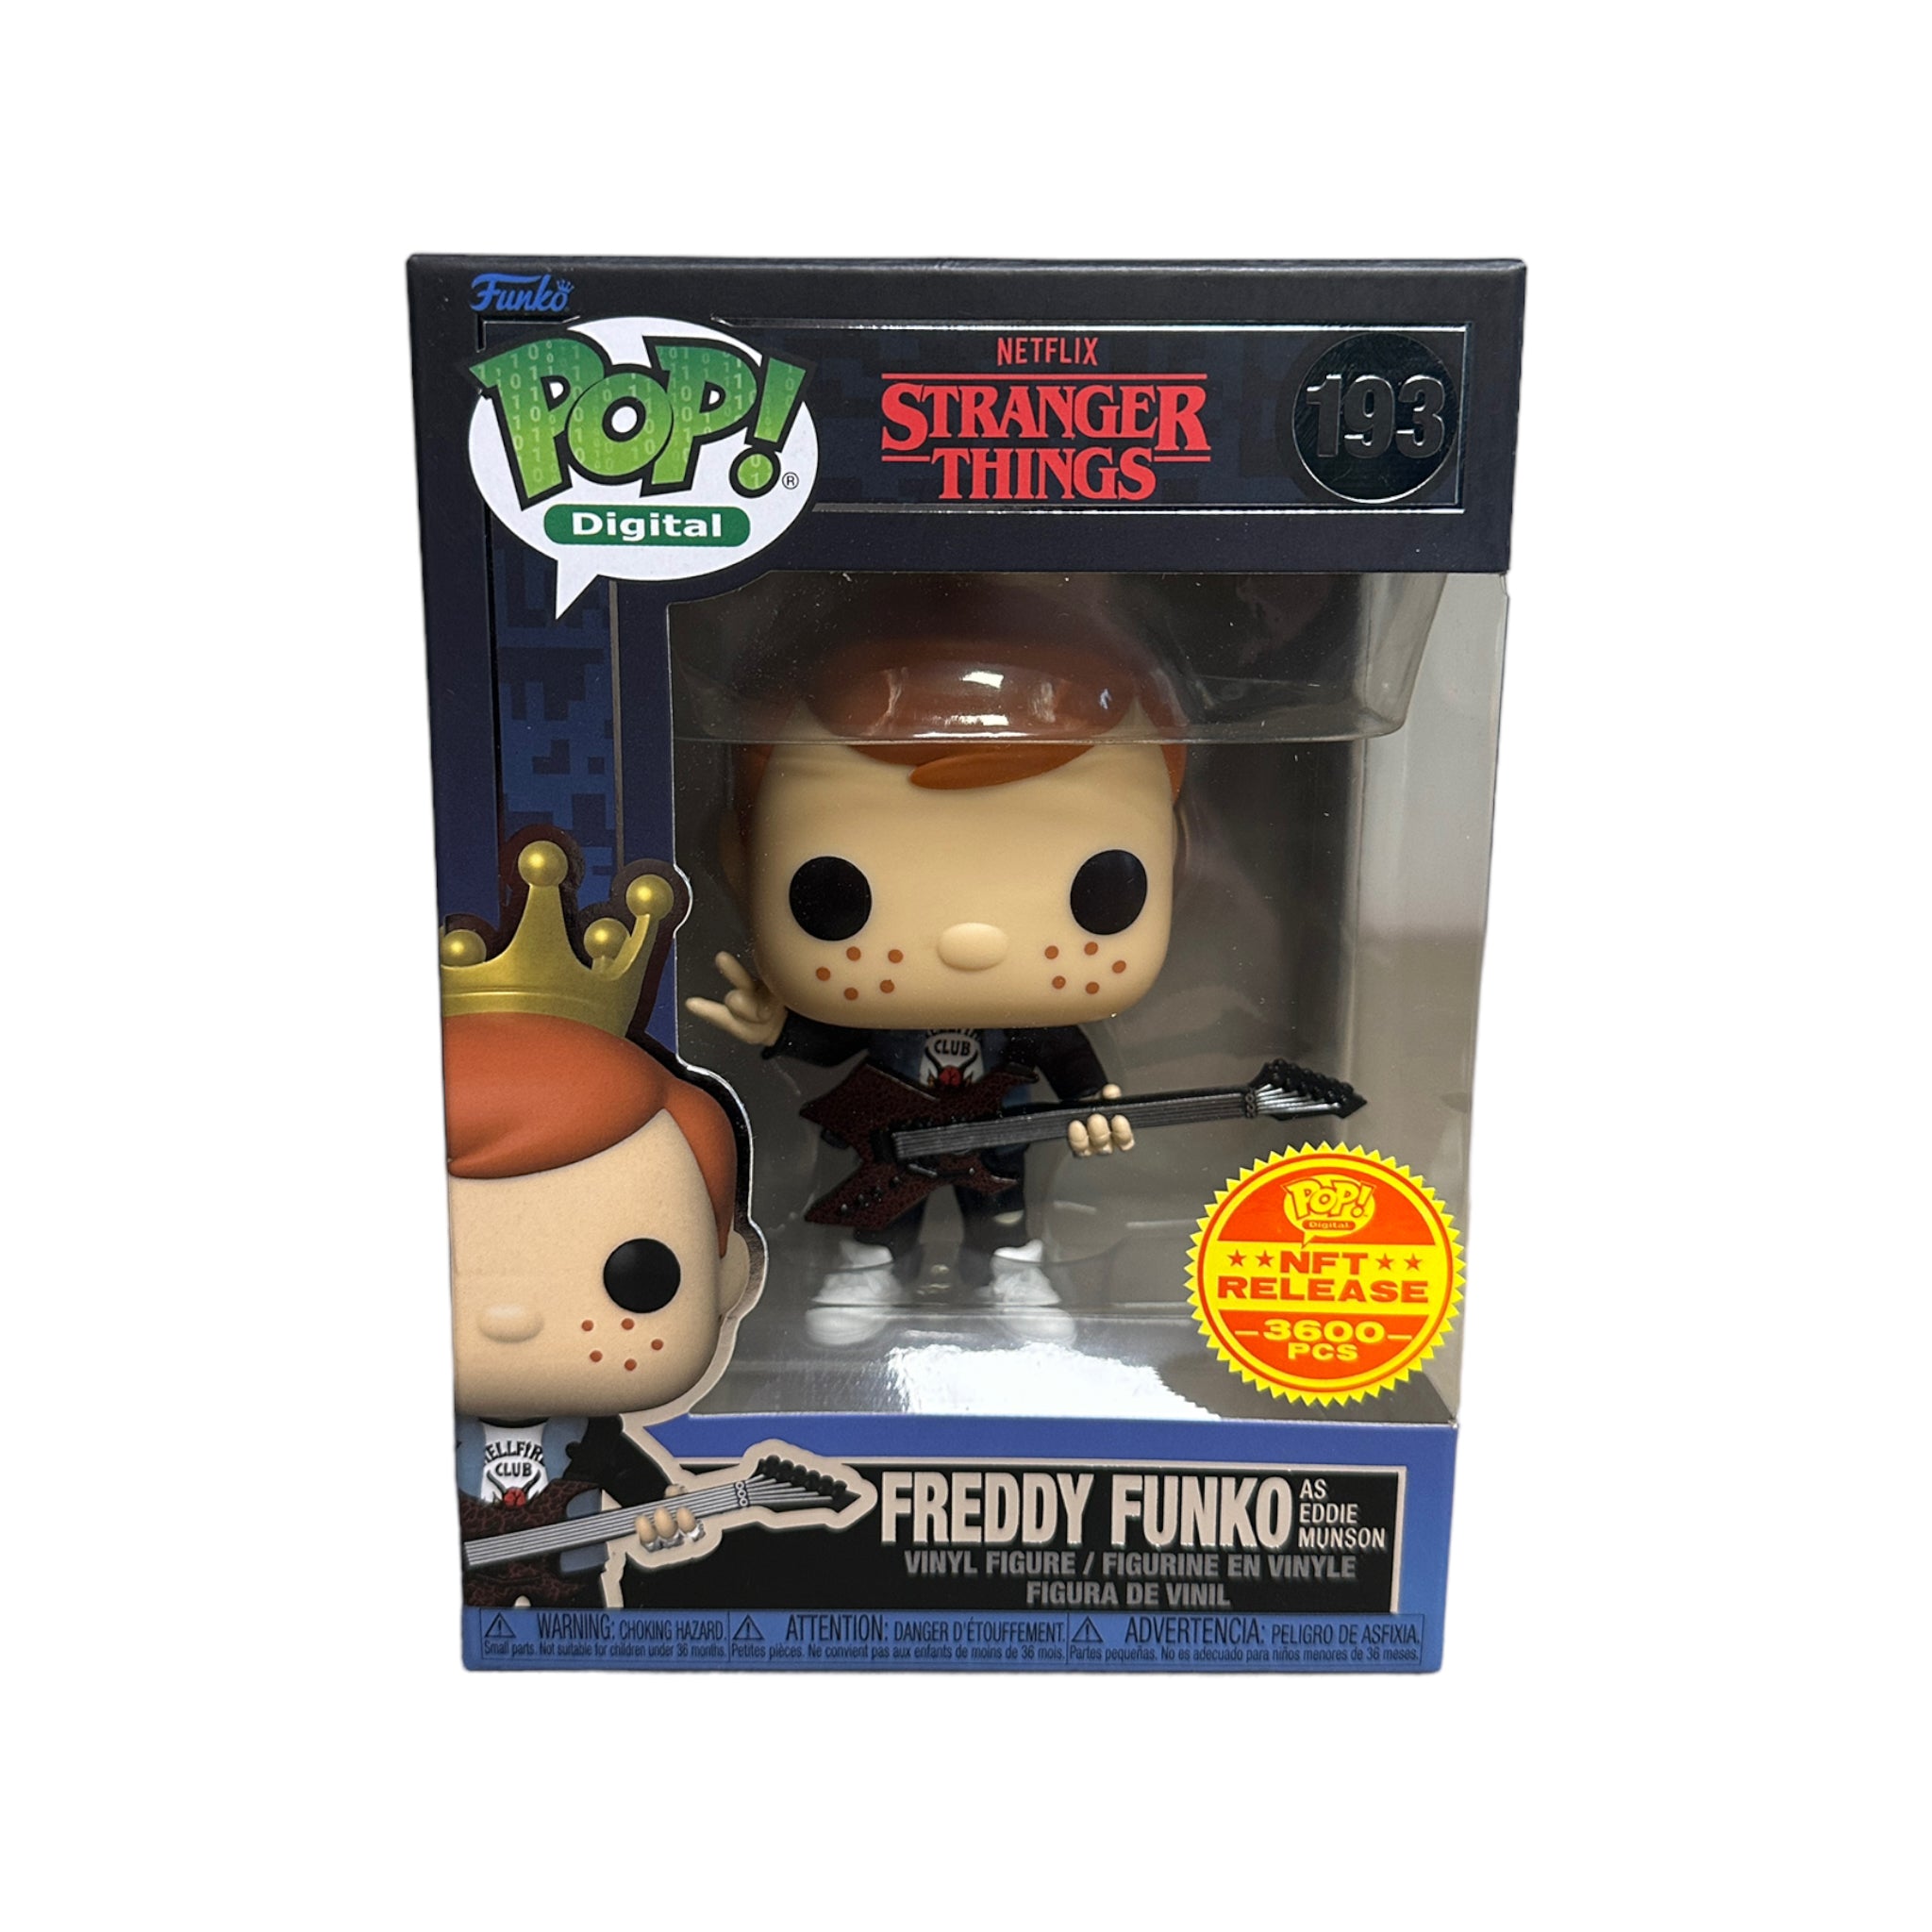 Freddy Funko as Eddie Munson #193 Funko Pop! - Stranger Things - NFT Release Exclusive LE3600 Pcs - Condition 8/10